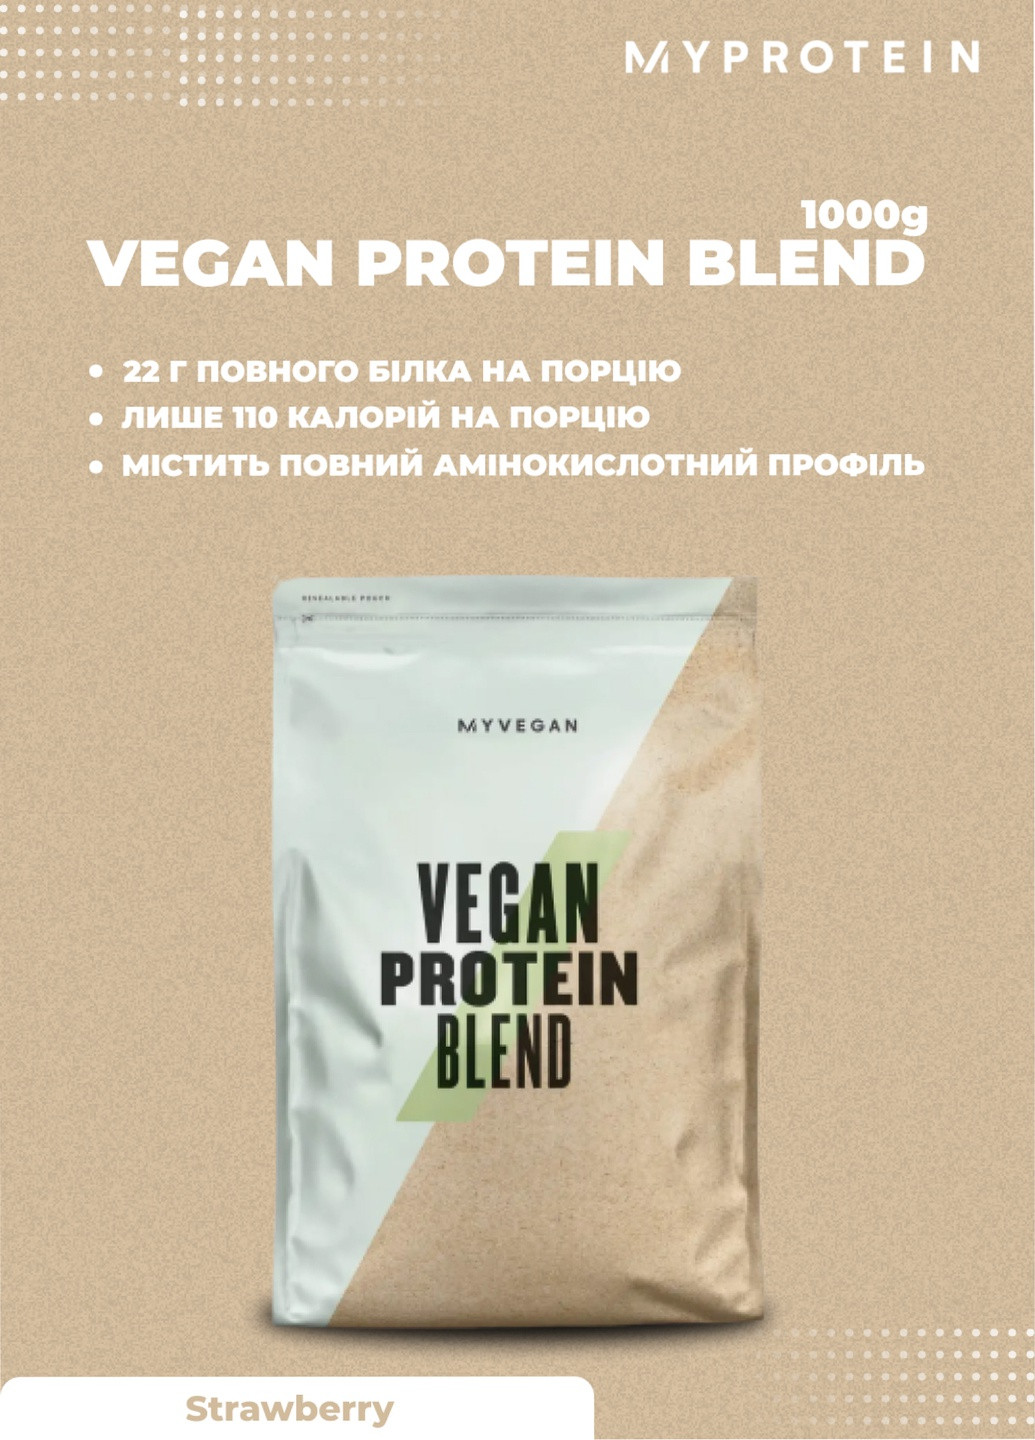 Протеин Vegan Blend 1000g Strawberry Myprotein My Protein